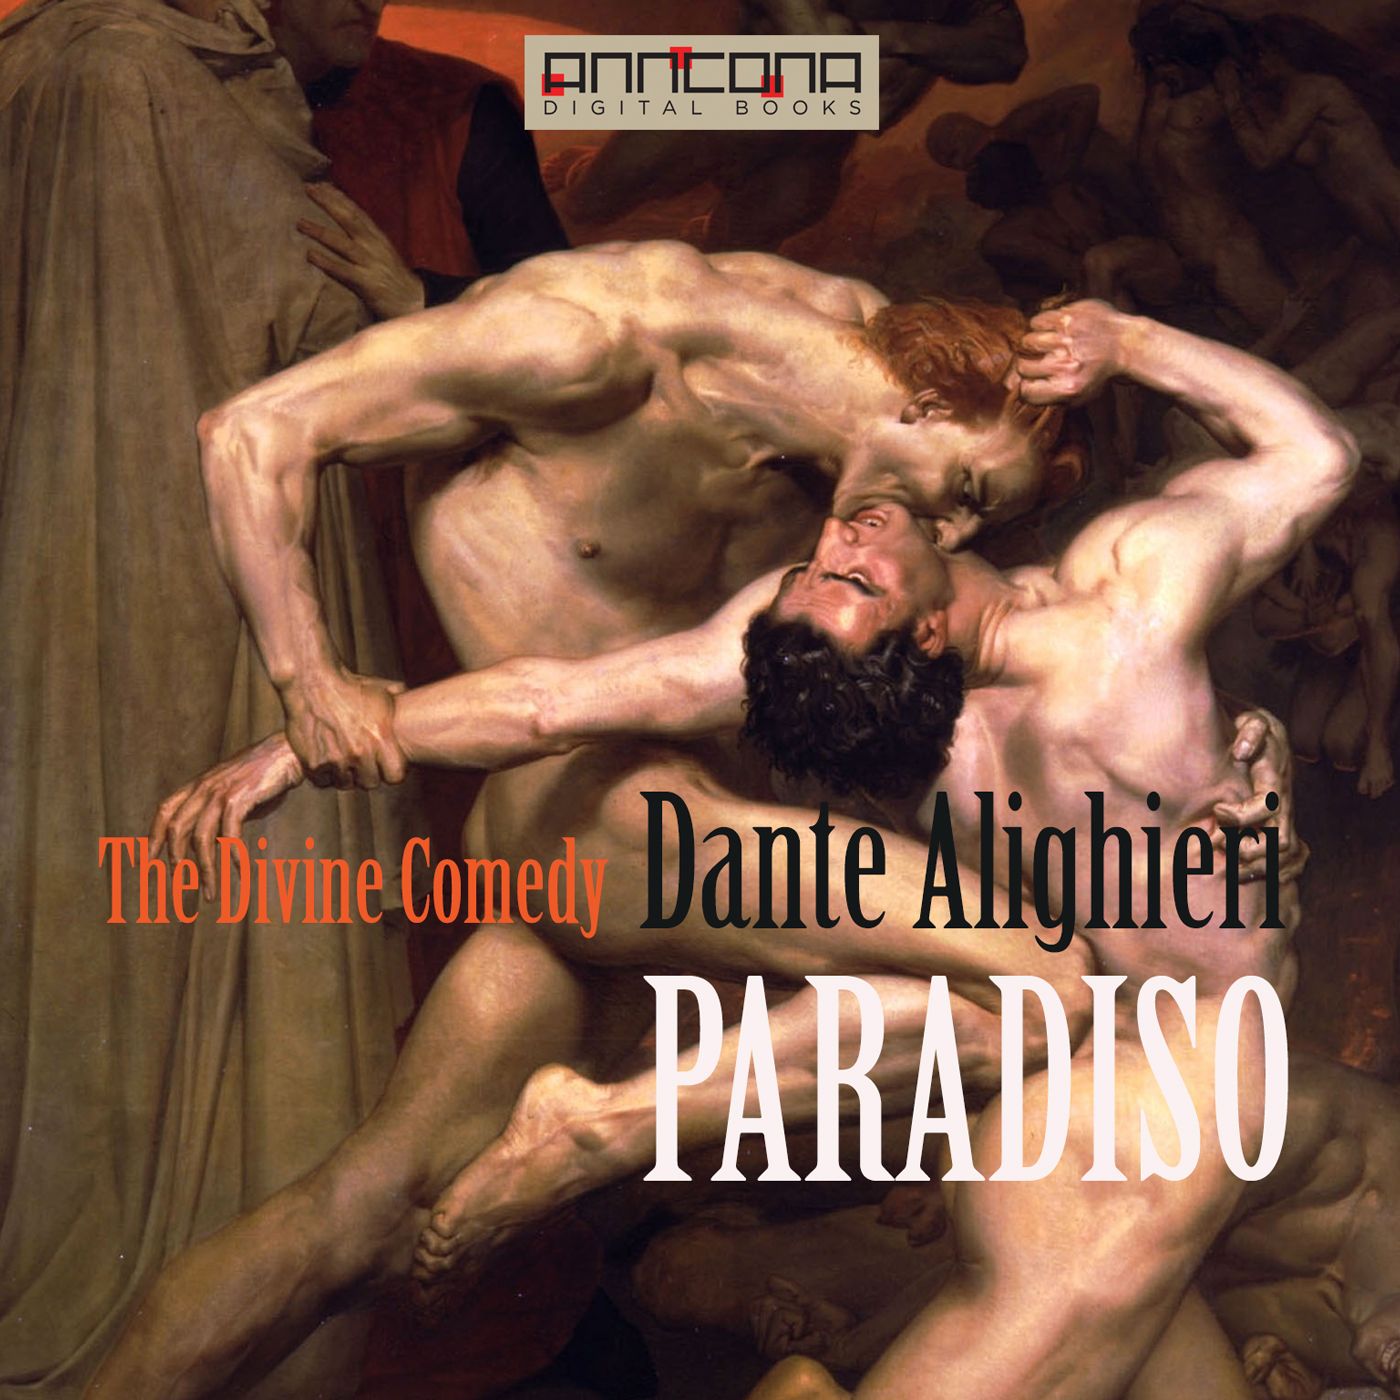 The Divine Comedy - PARADISO, ljudbok av Dante Alighieri